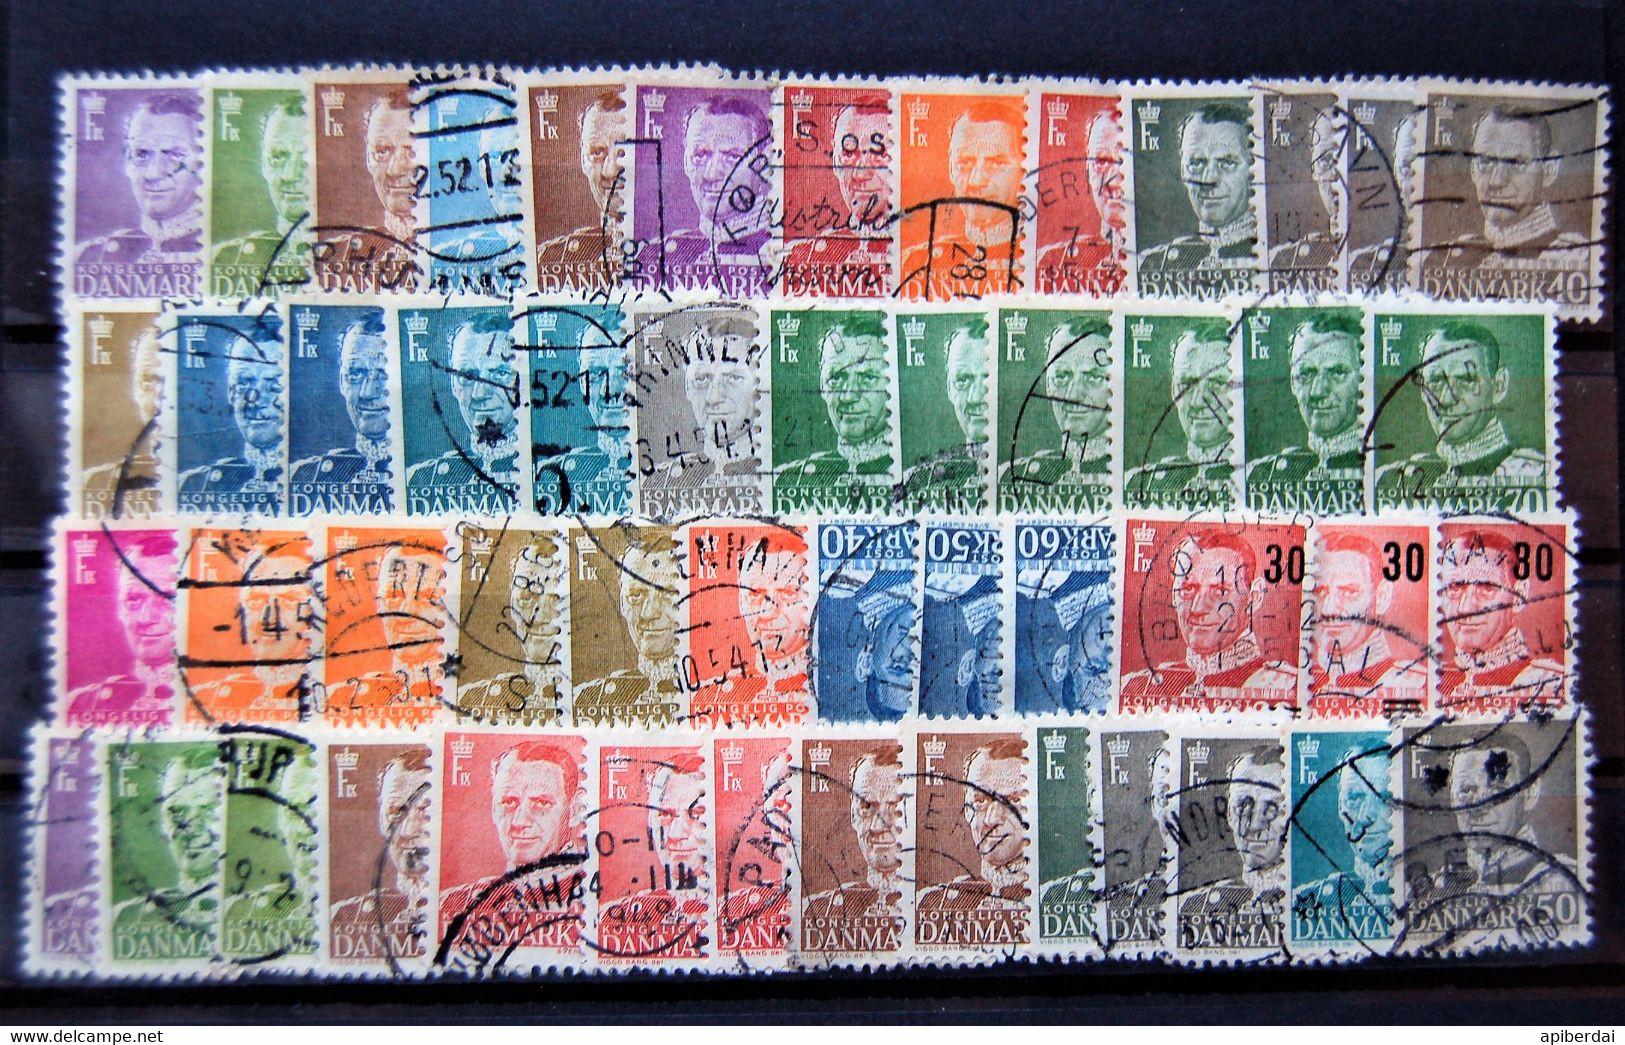 Danemark Danmark - 50 Stamps Frederik IX Used - Used Stamps